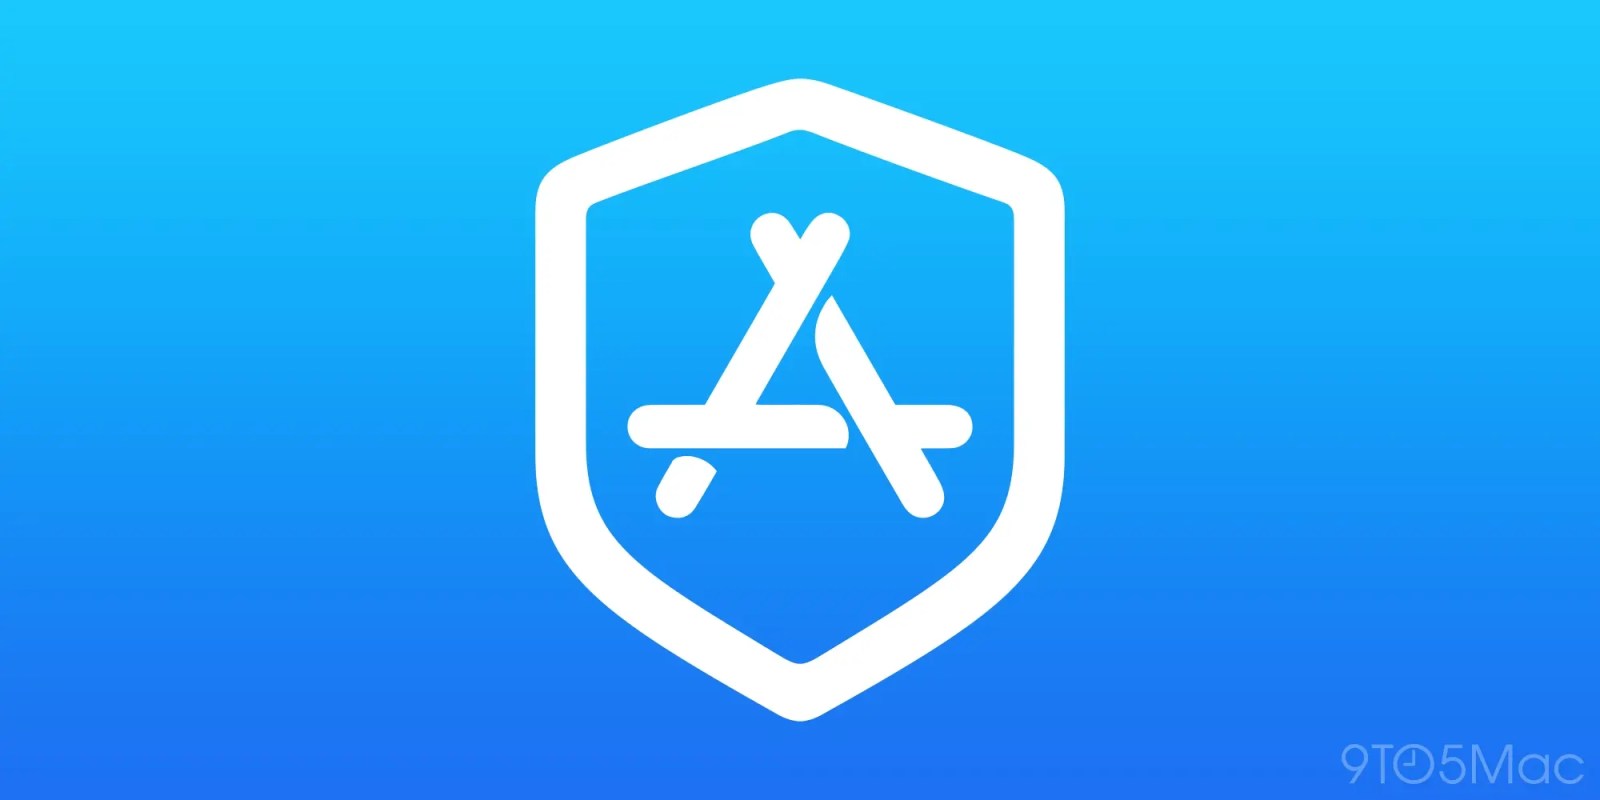 App Store security